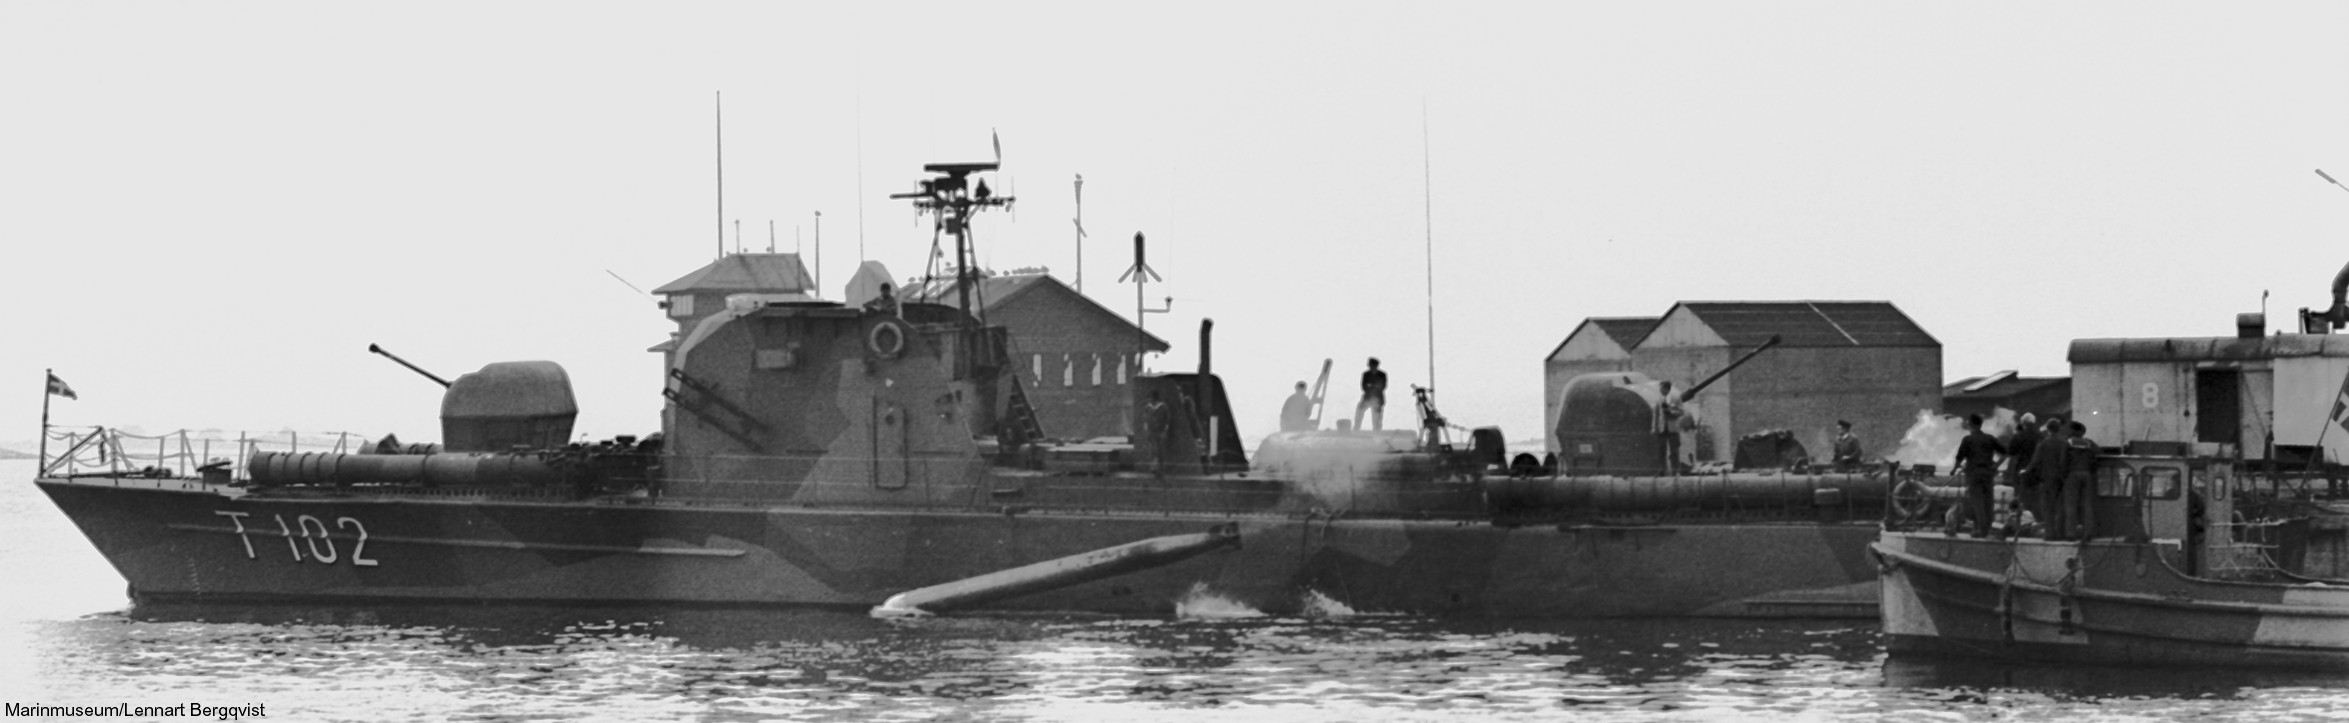 t102 plejad hms hswms class fast attack craft torpedo boat vessel swedish navy svenska marinen 04